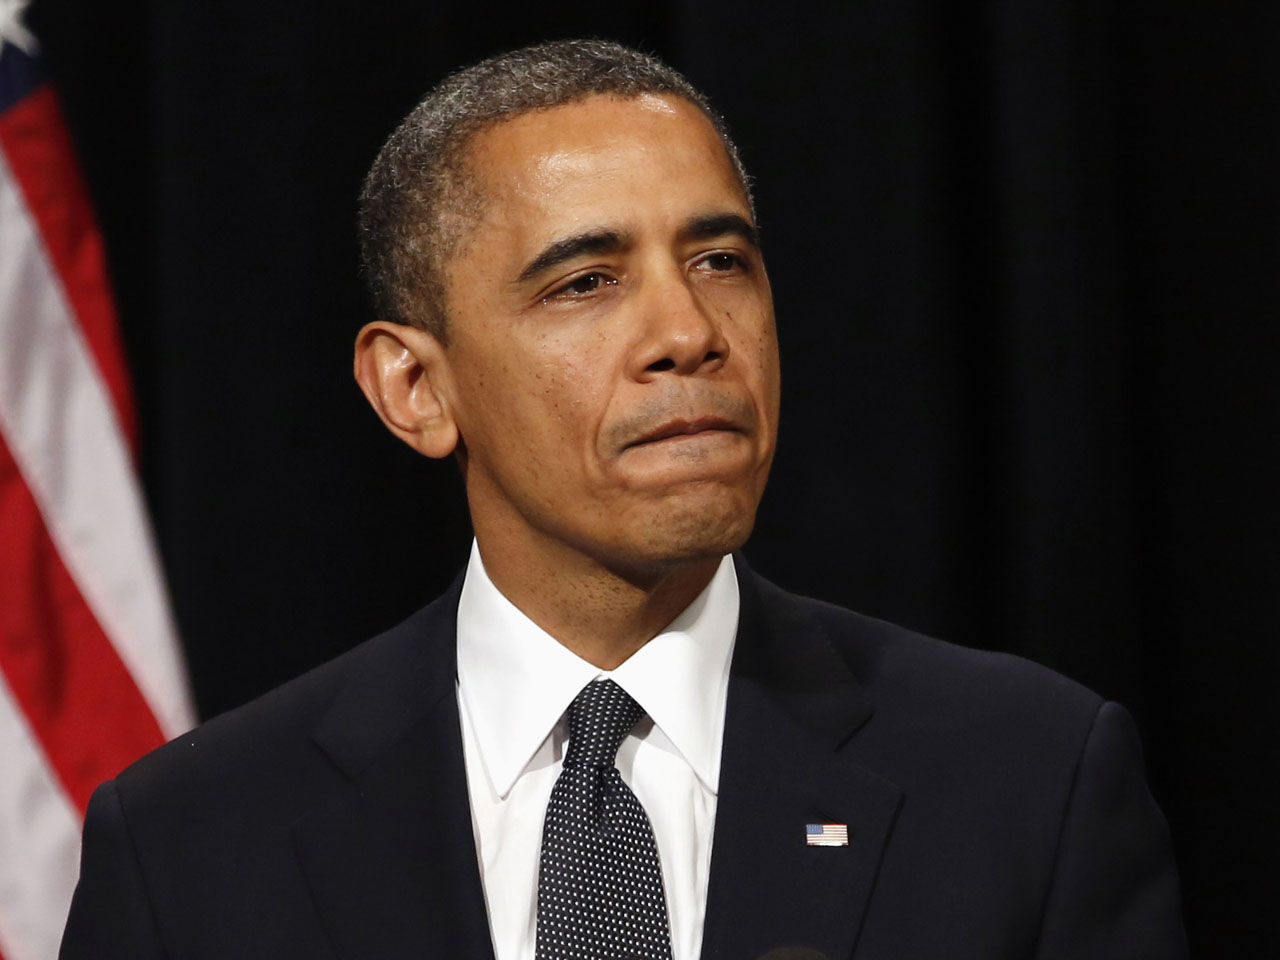 VIDEO: Obama announces new effort to reduce gun violence